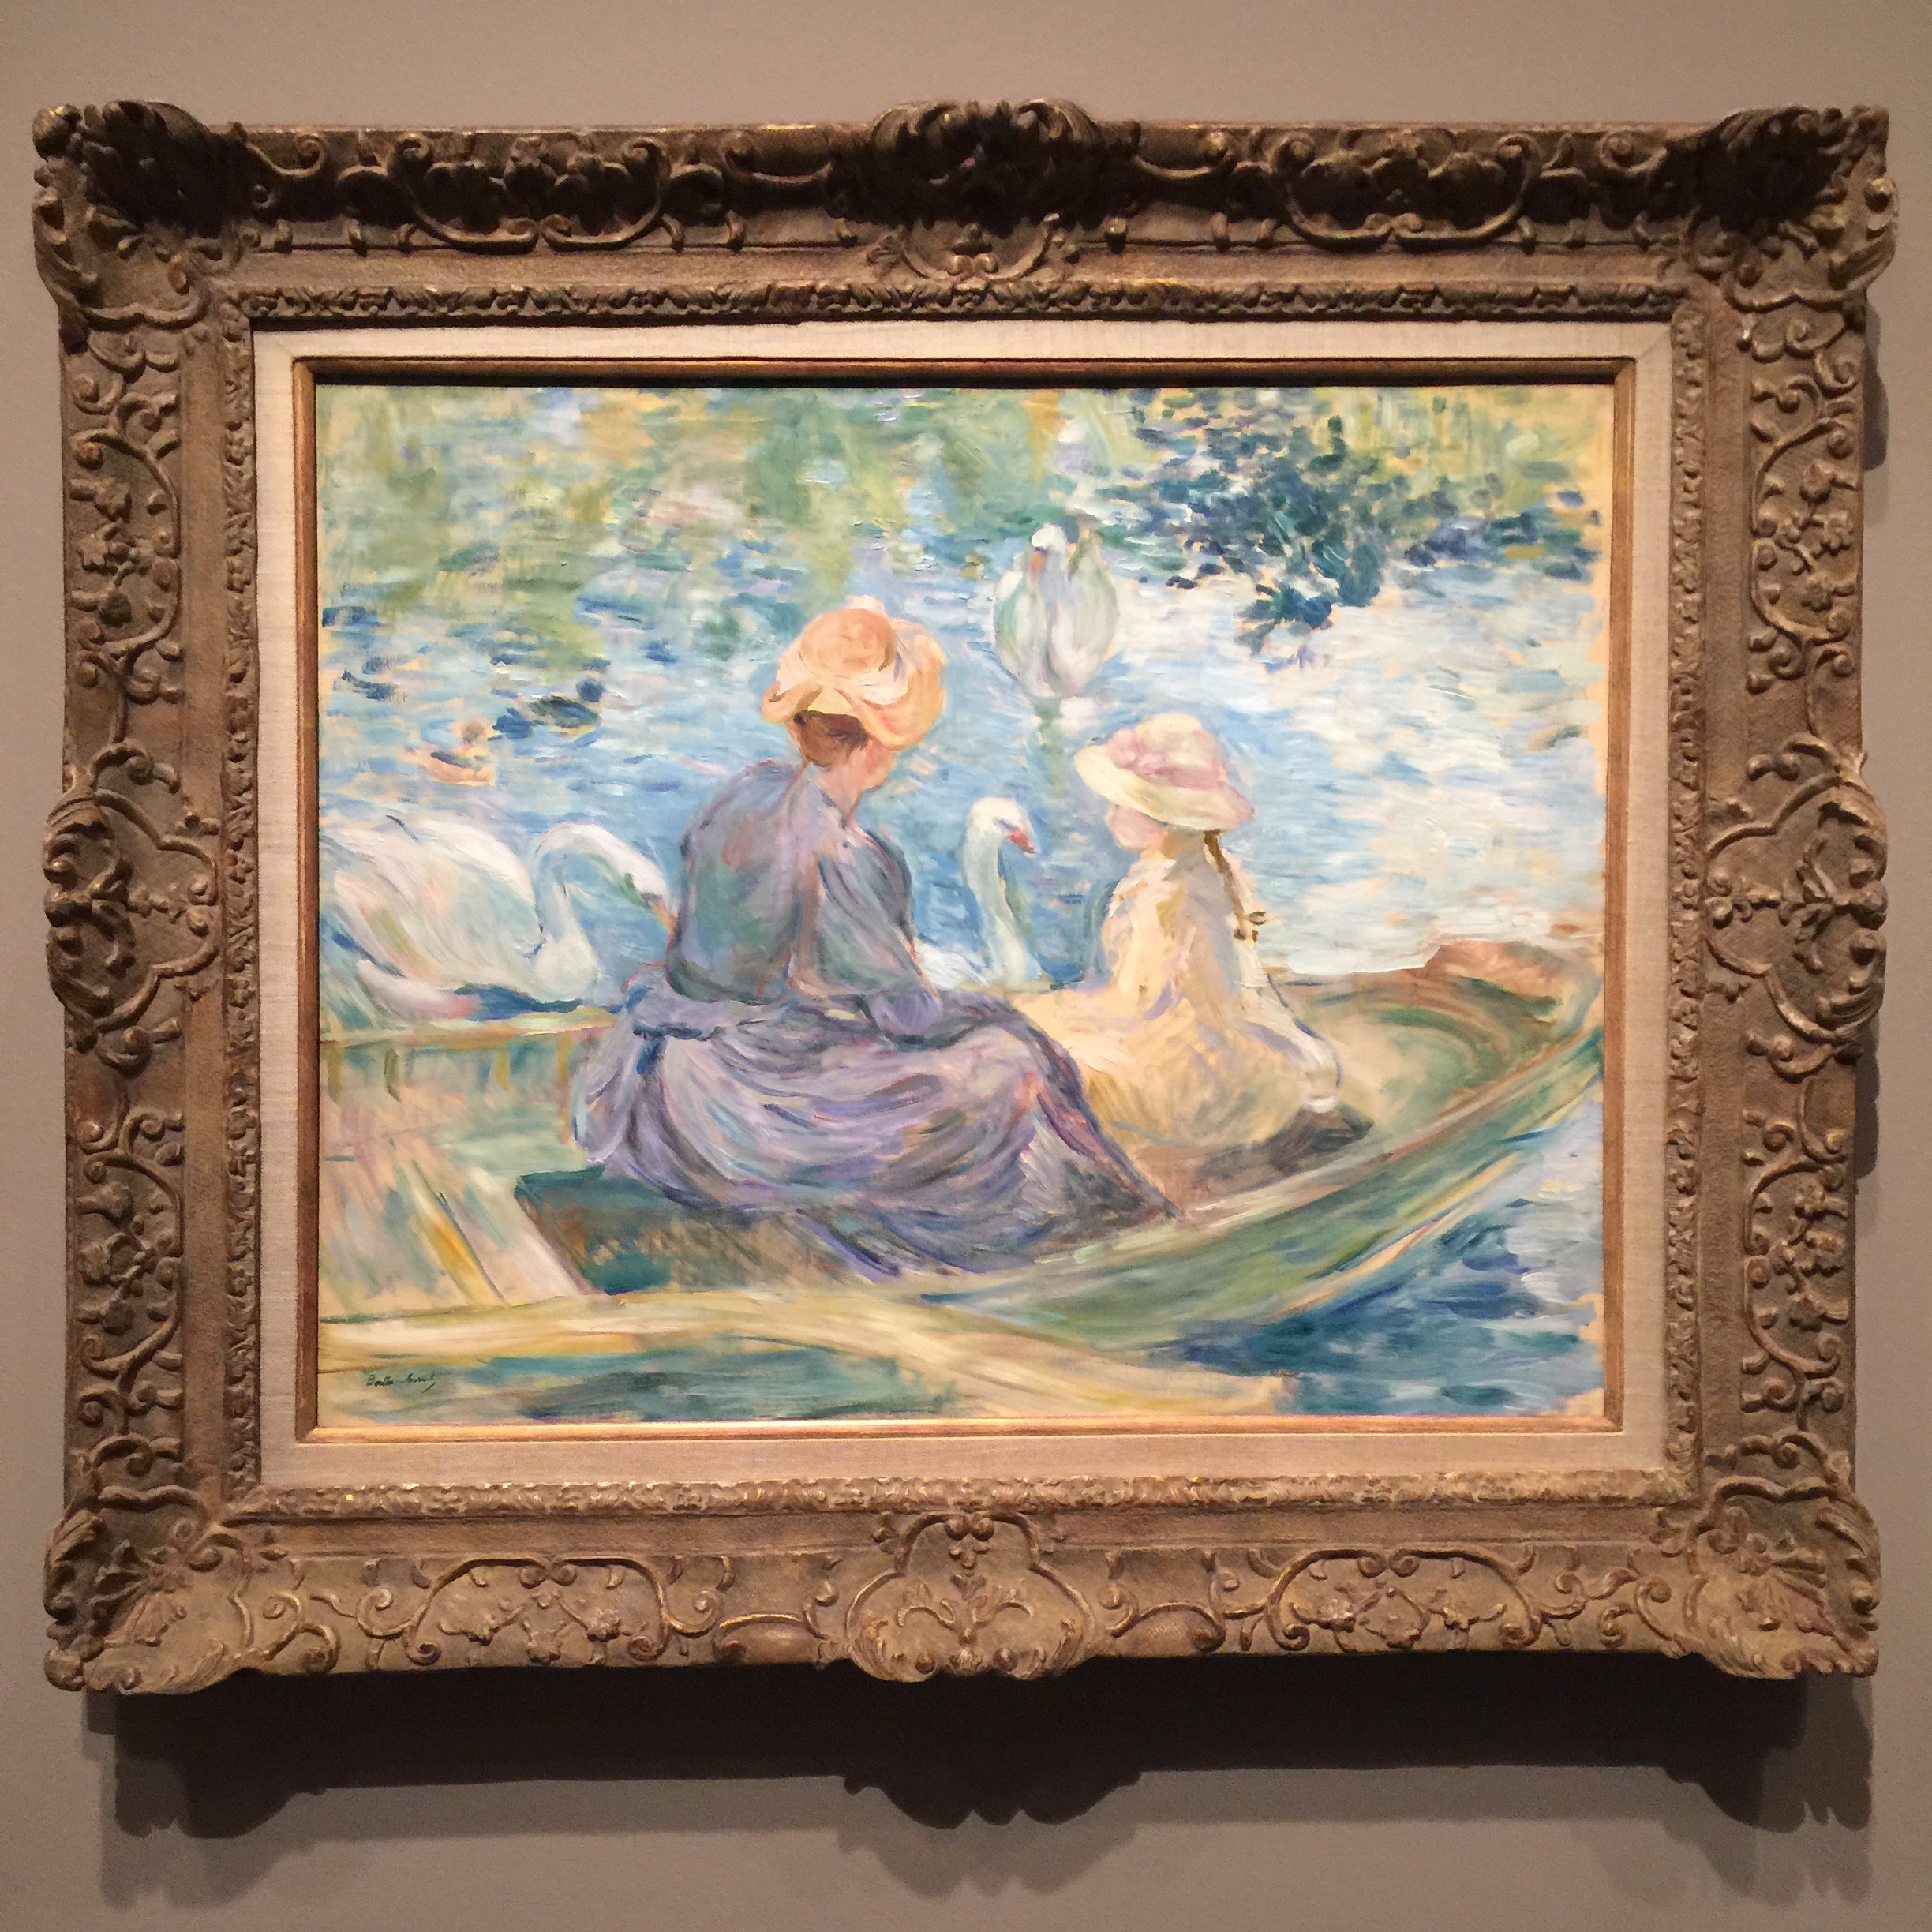 "Women in Boat" by Mary Cassatt, "Her Paris" Denver Art Museum show